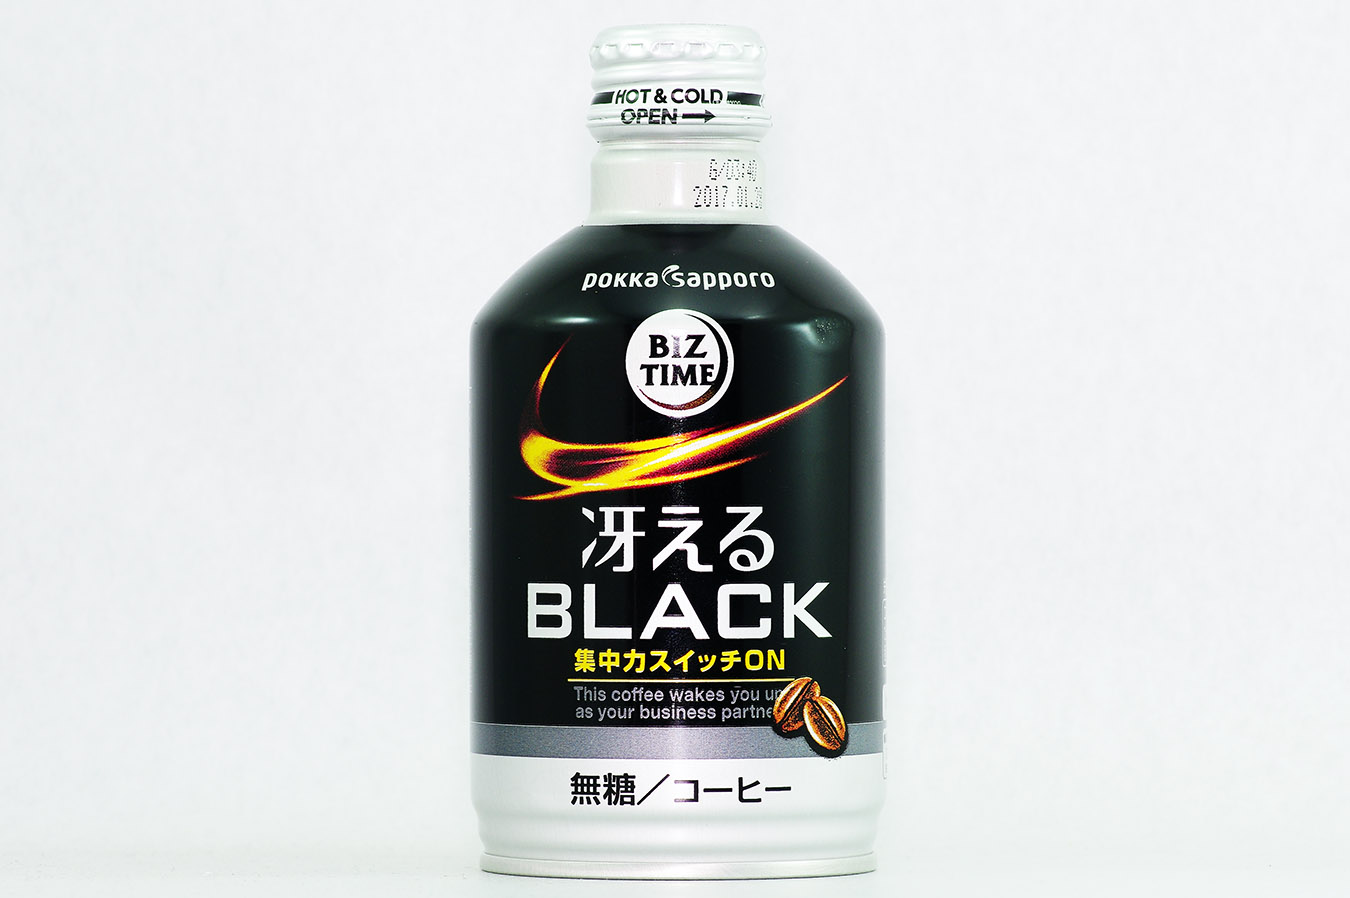 BIZ TIME 冴えるブラック 275mlボトル缶 2015年3月